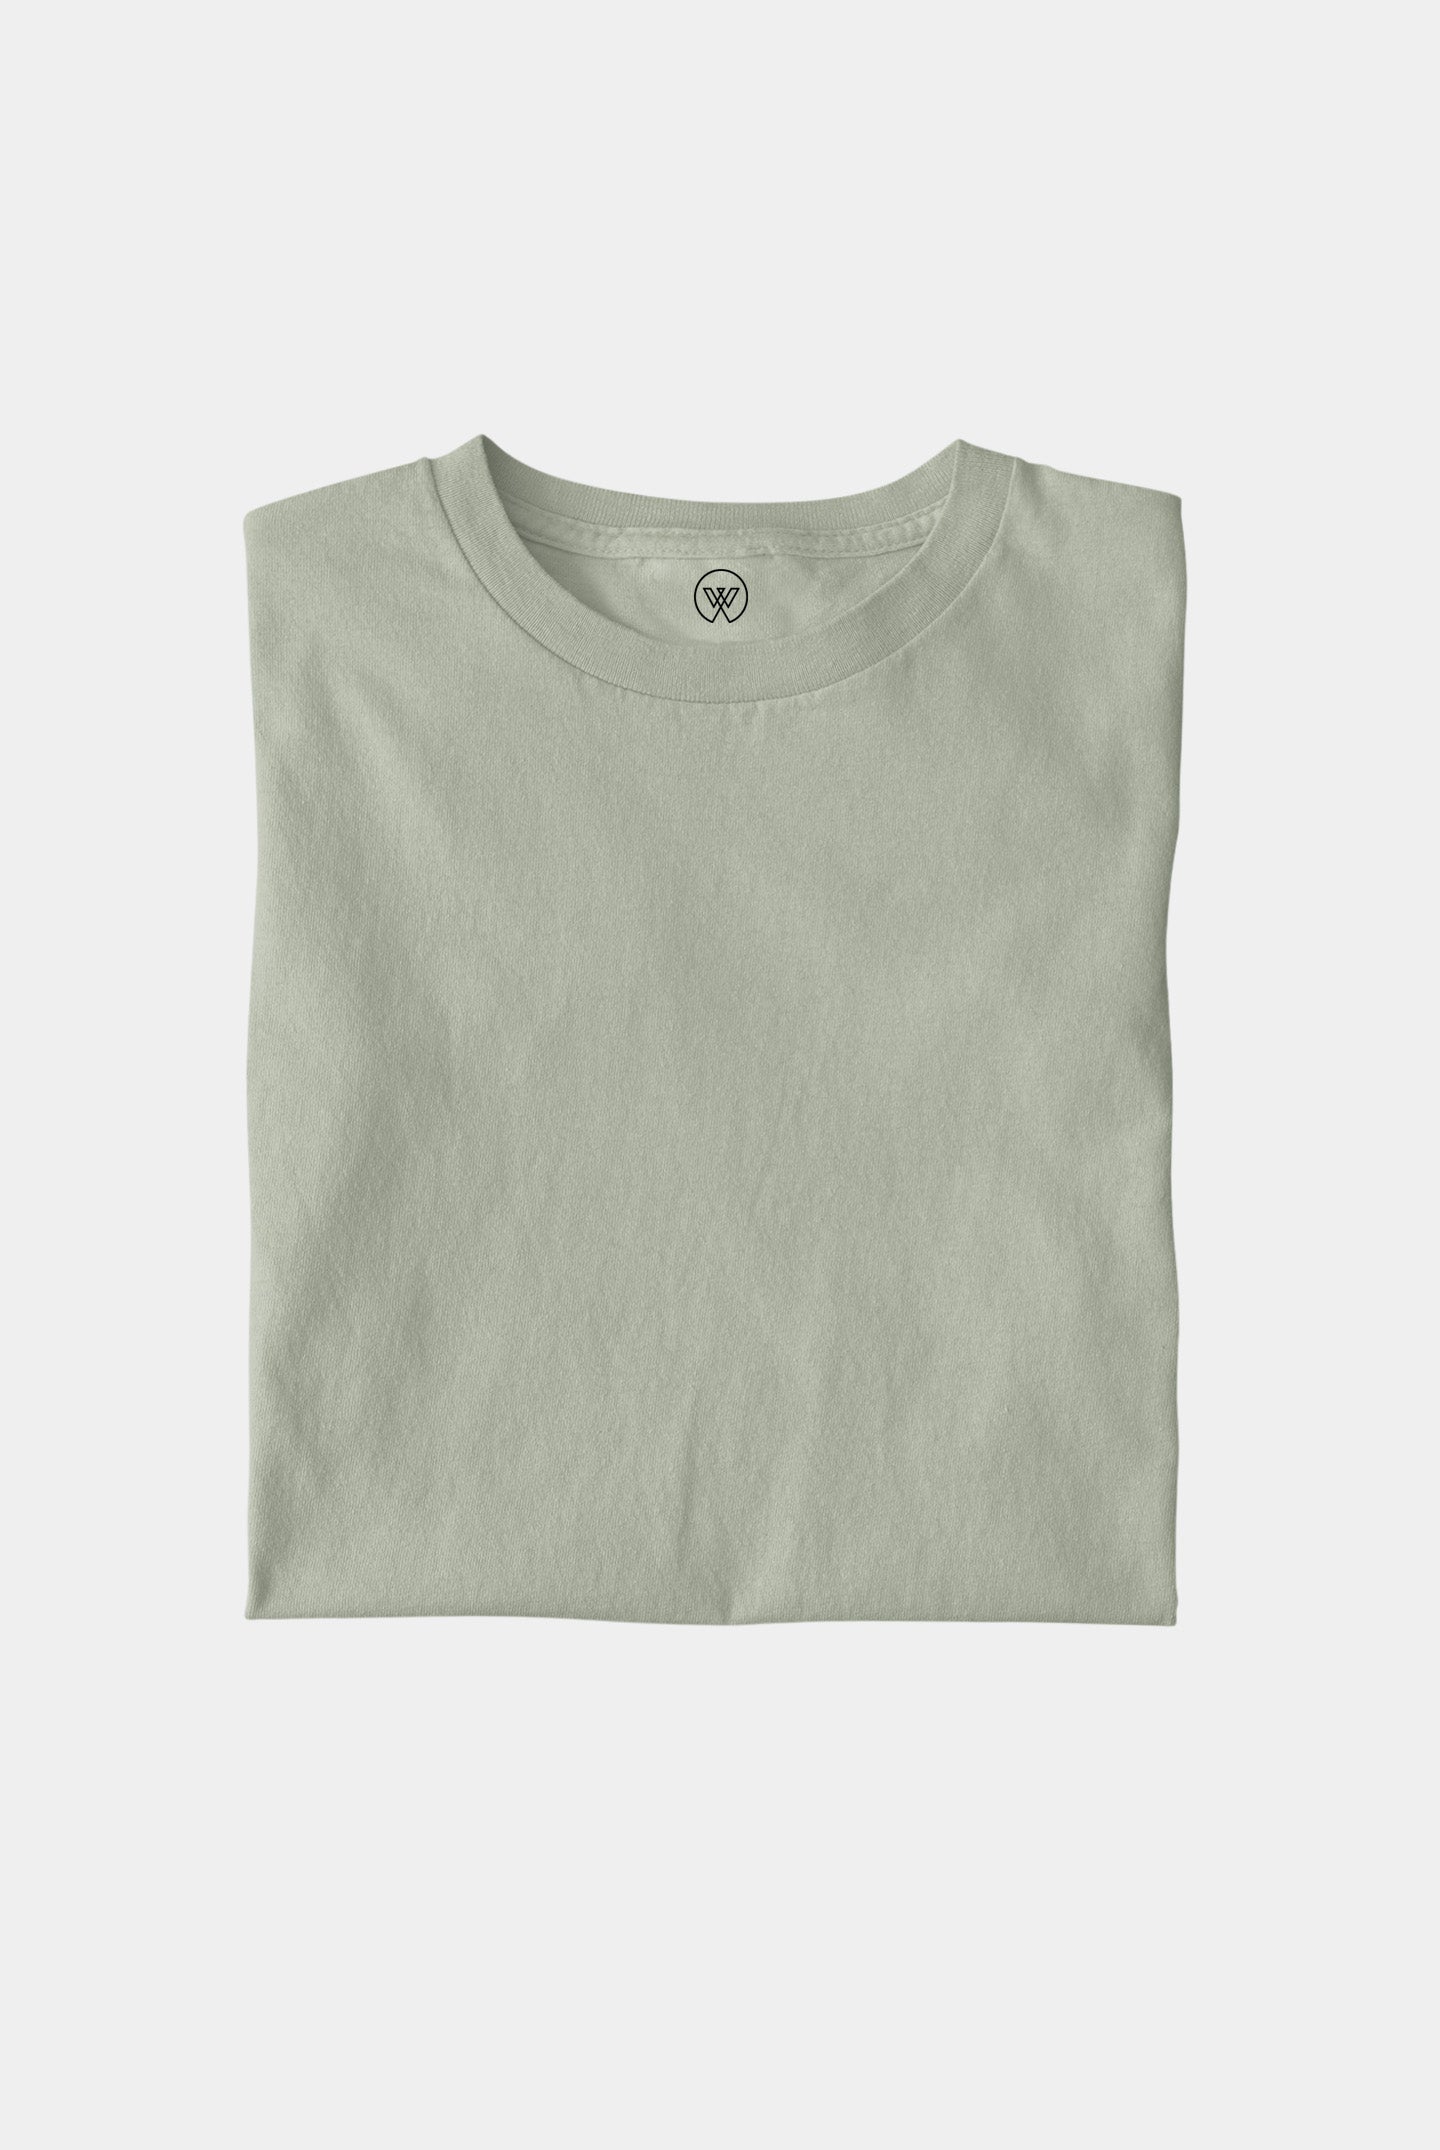 Sage Grey Unisex T-shirt